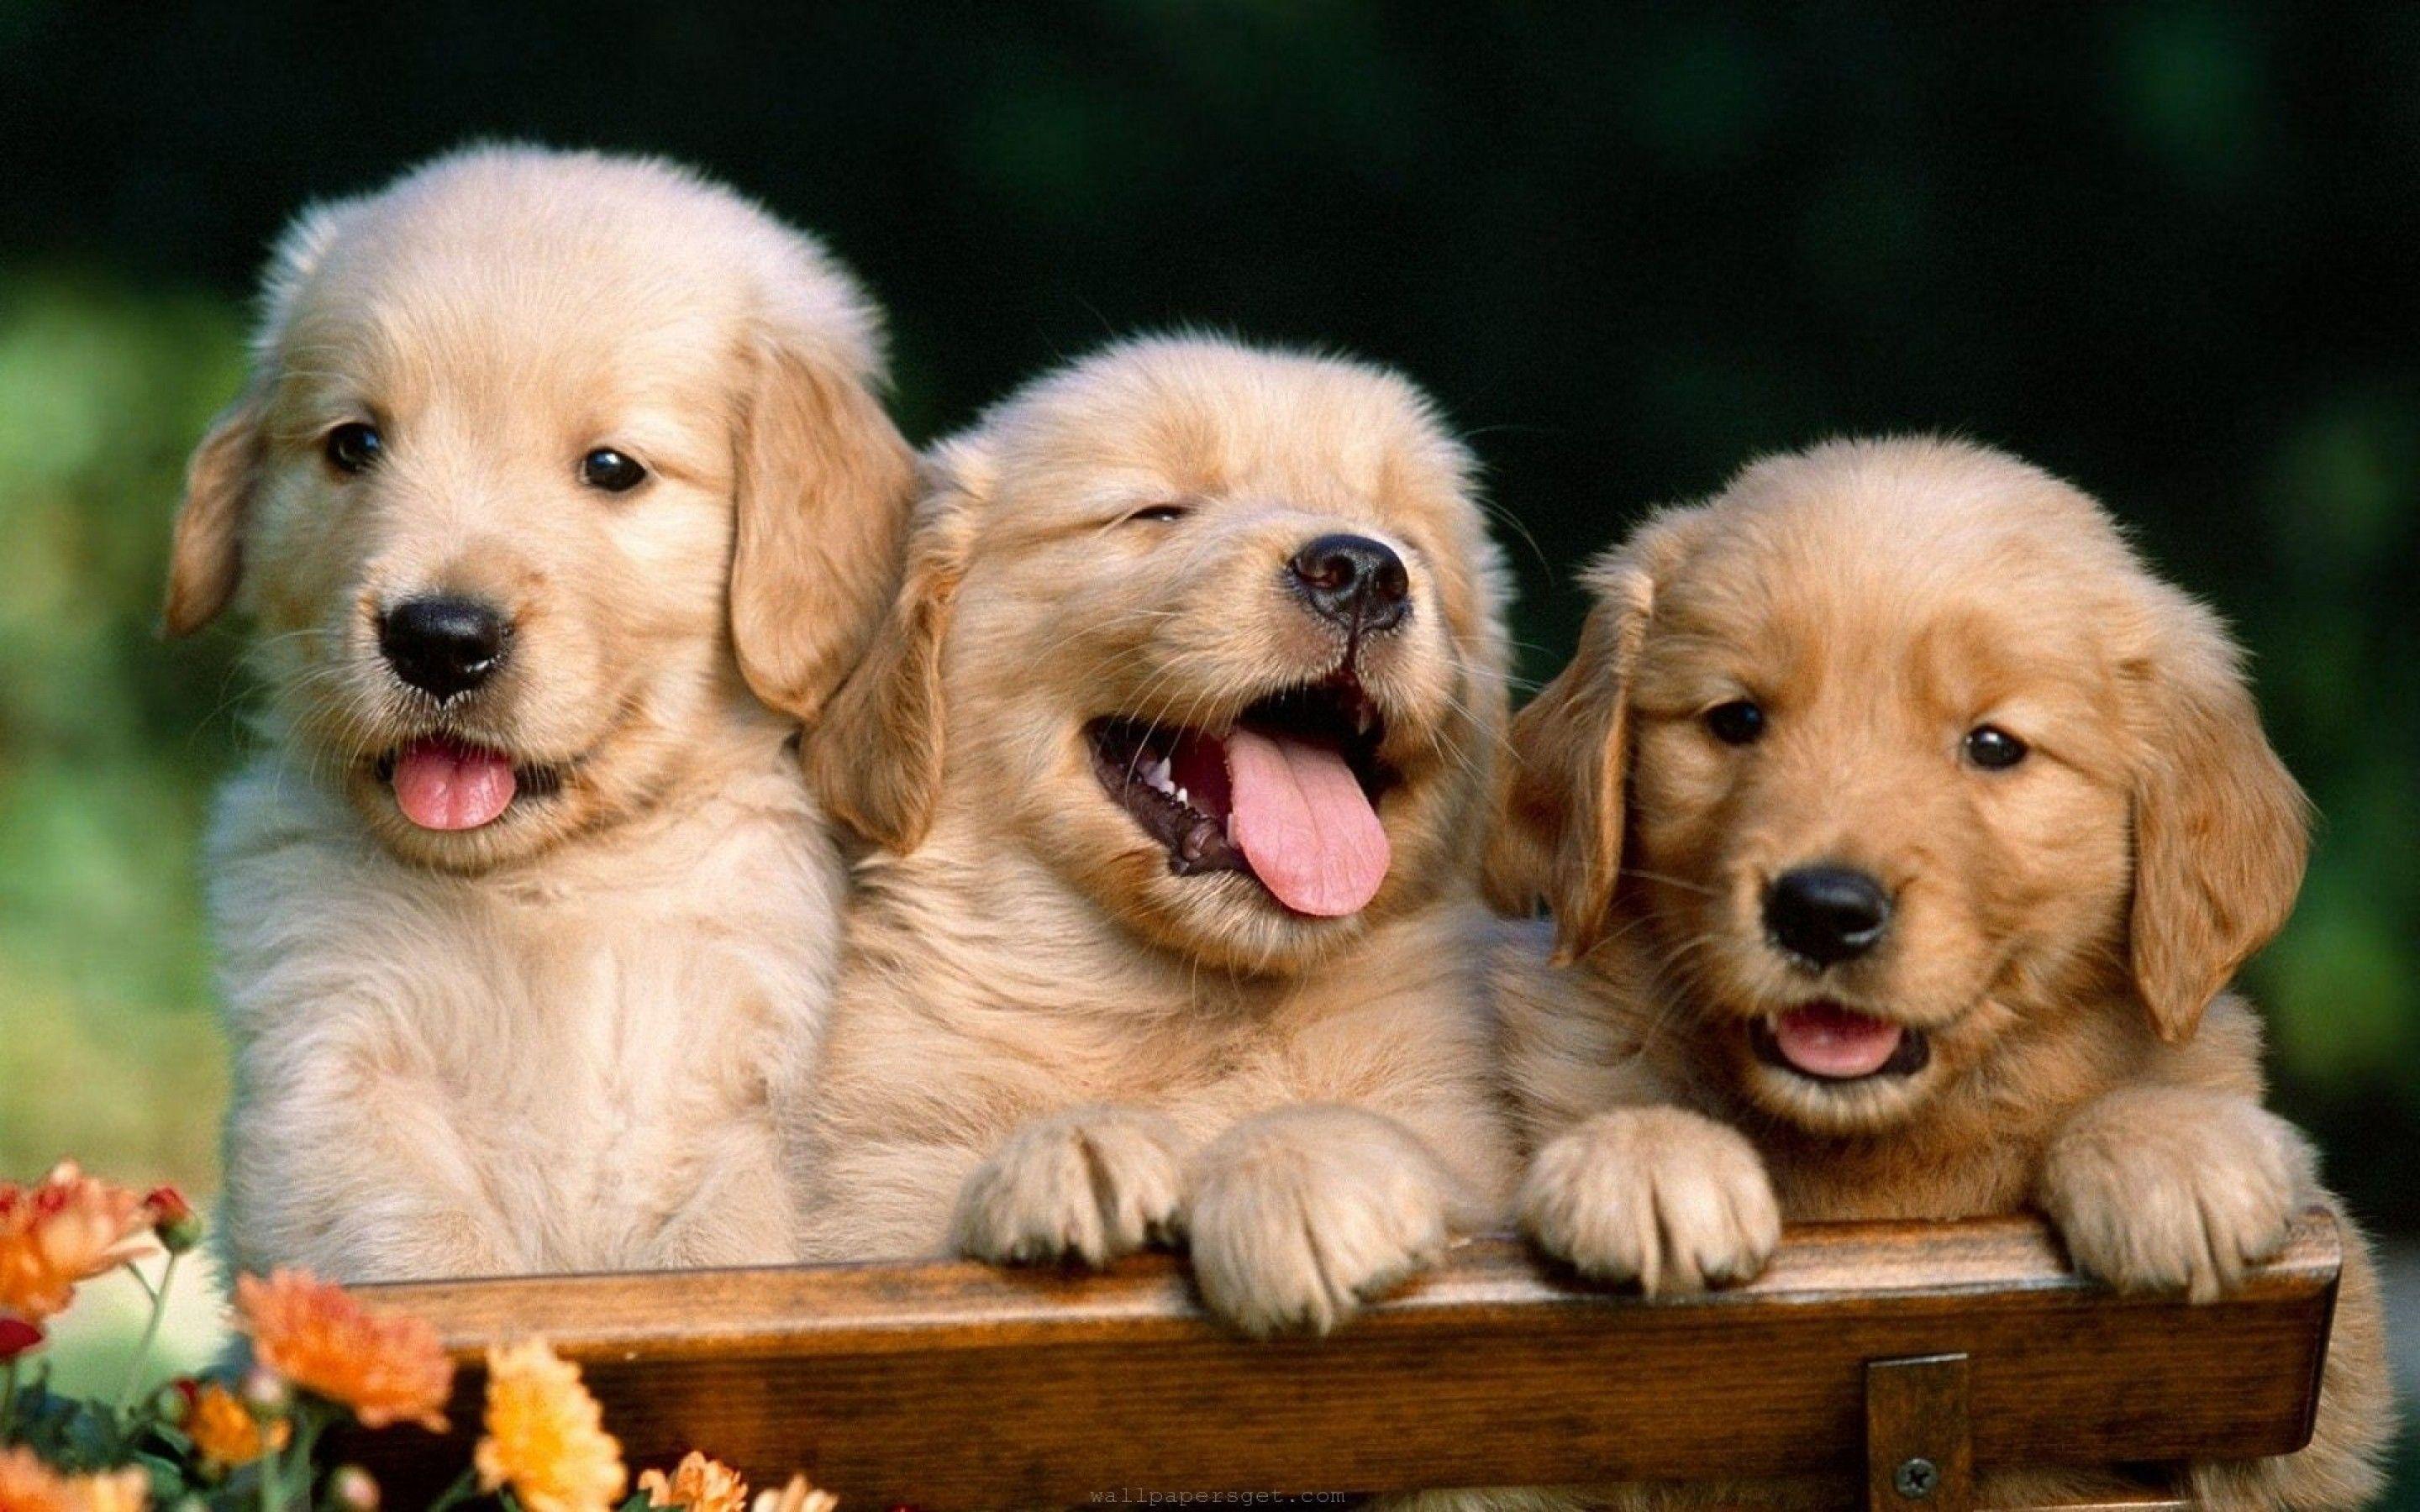 Cute Dog HD Wallpapers - Top Free Cute Dog HD Backgrounds ...